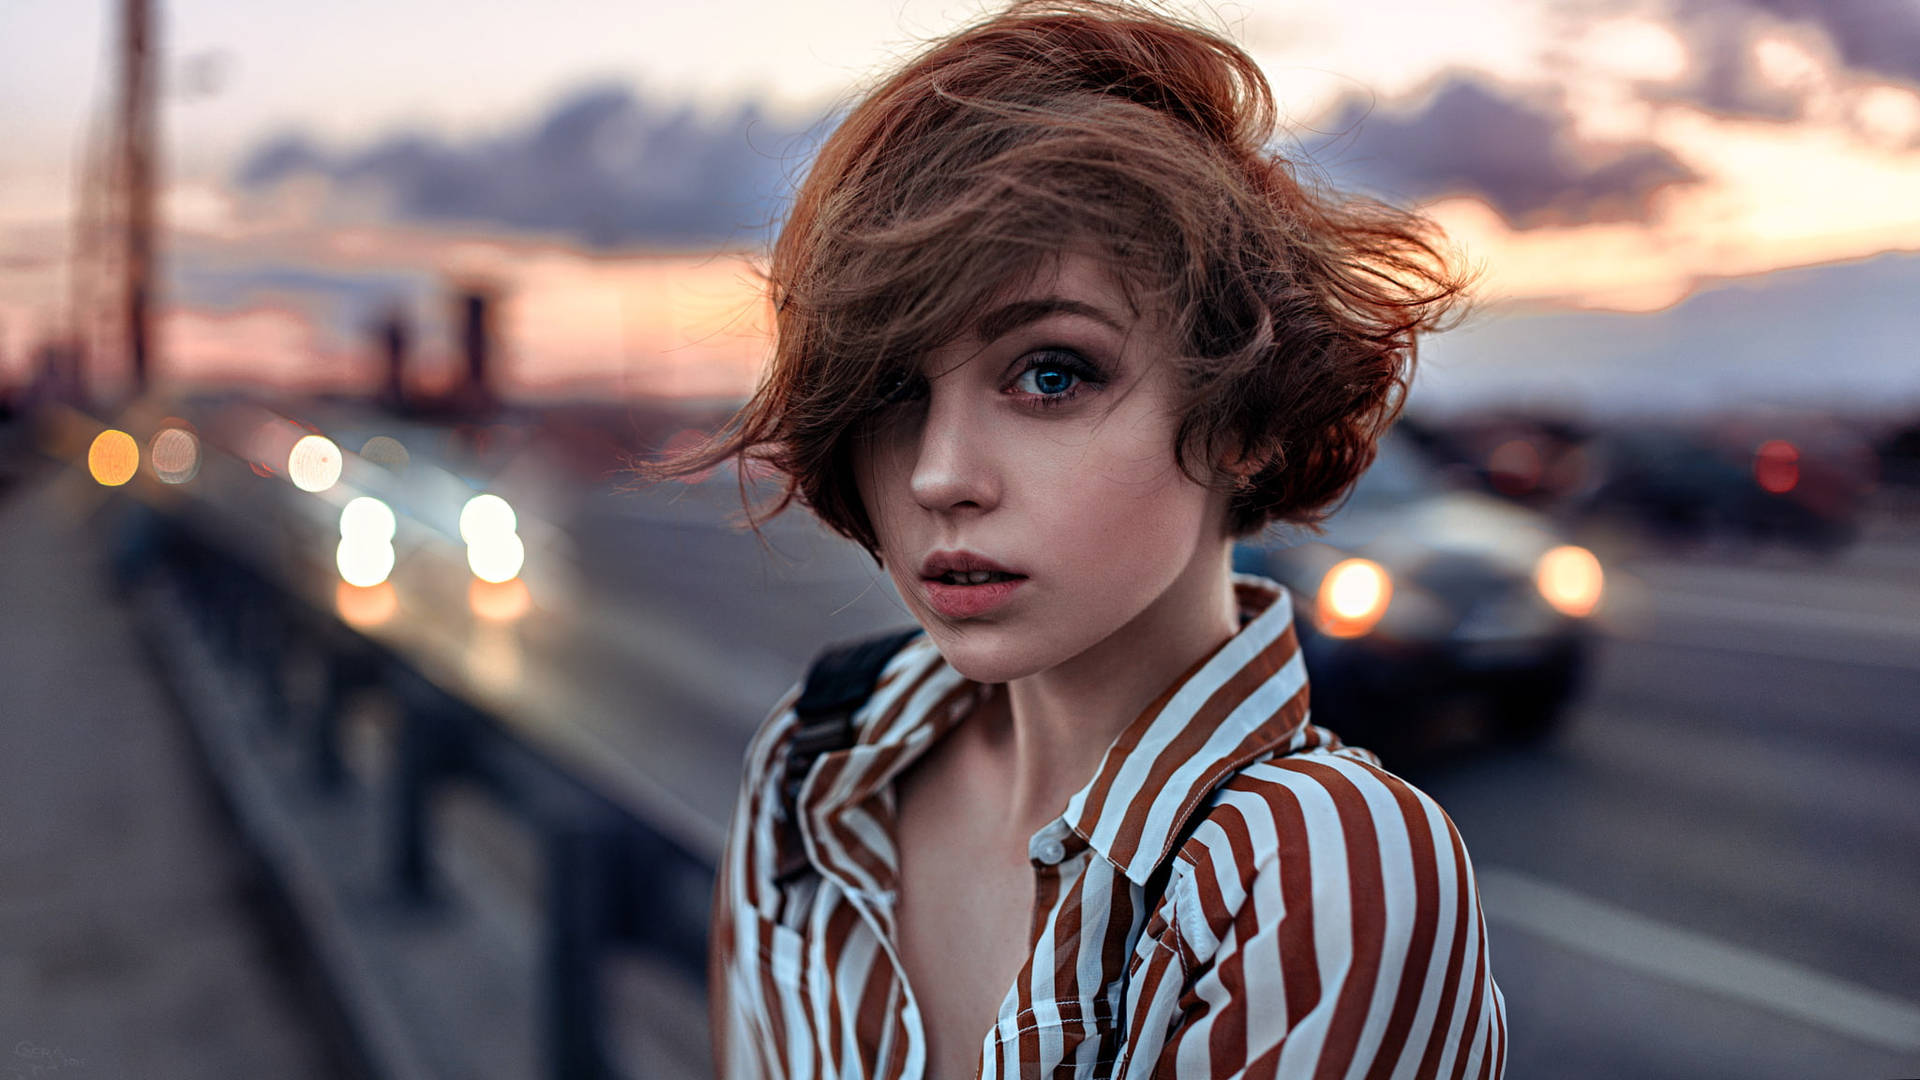 Russian Girl With Short Hair Wallpaper